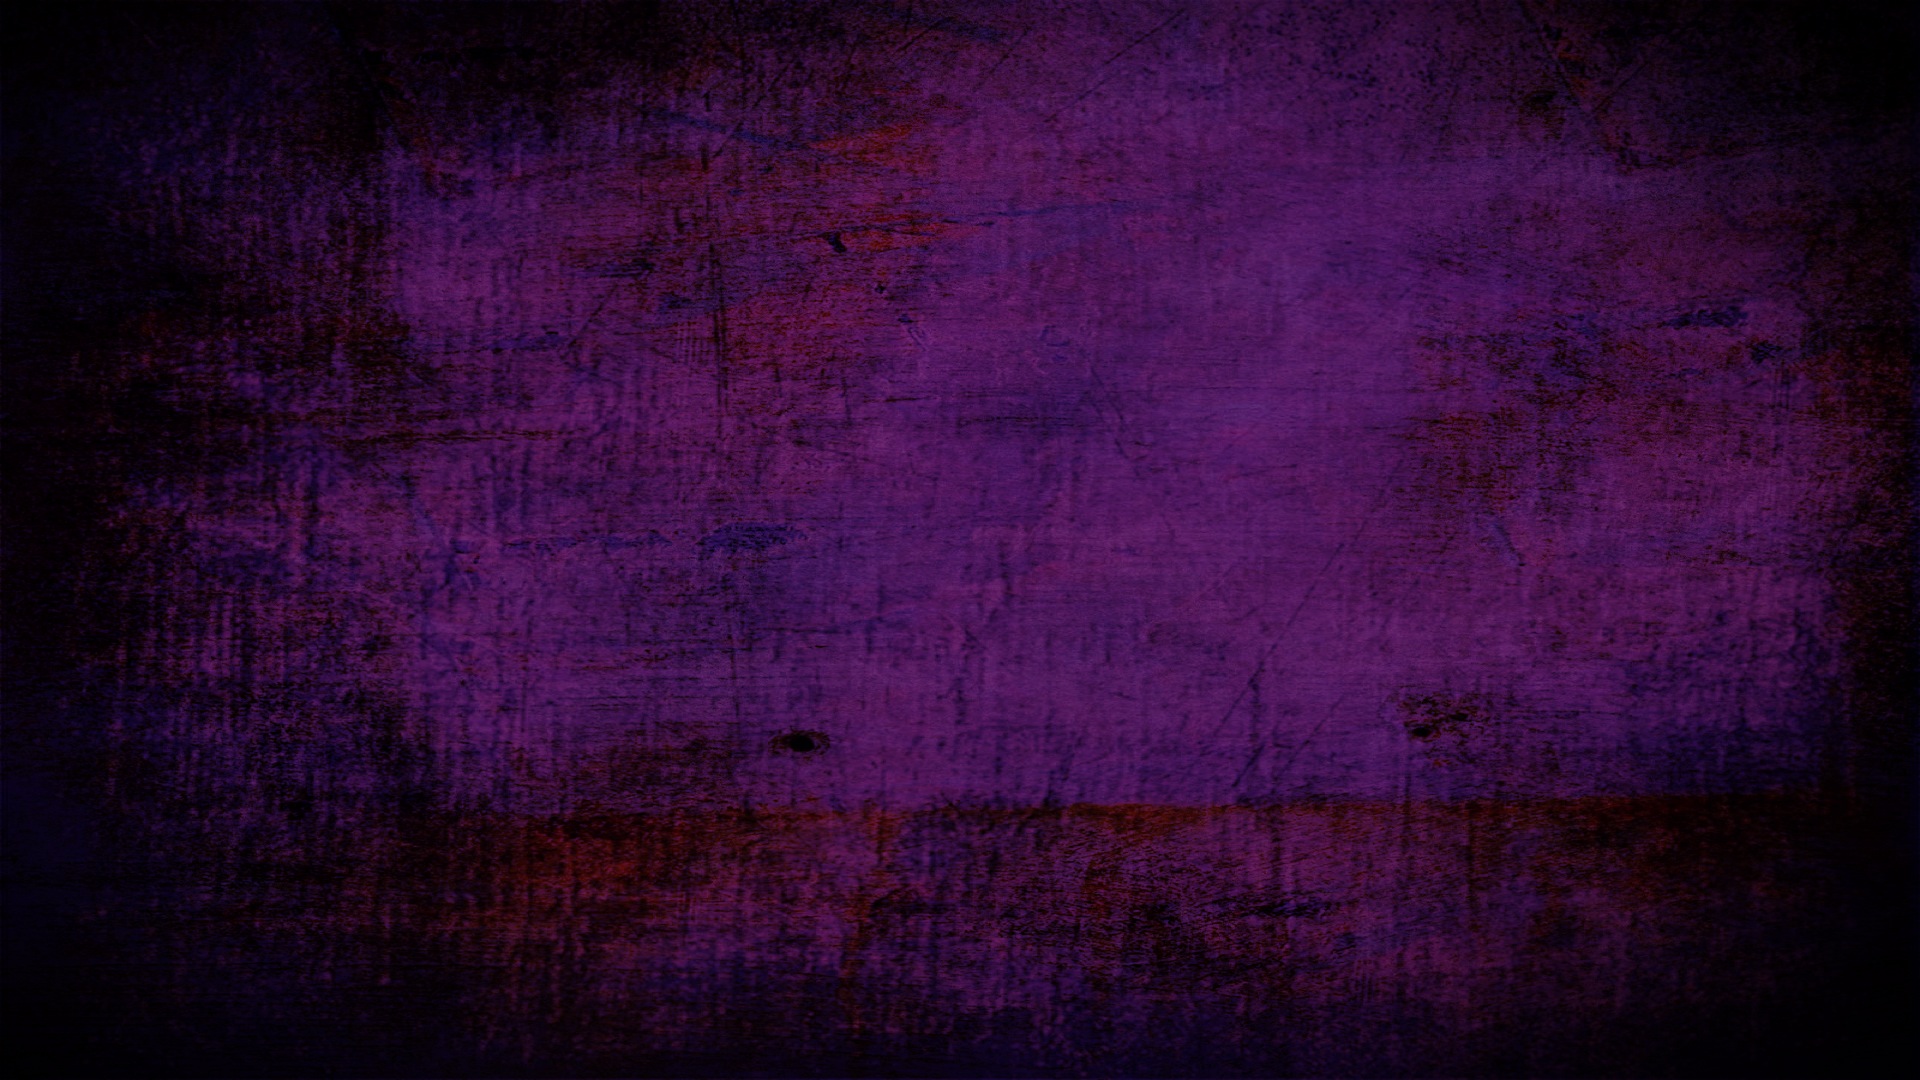 Dark Purple Background Image Amp Pictures Becuo